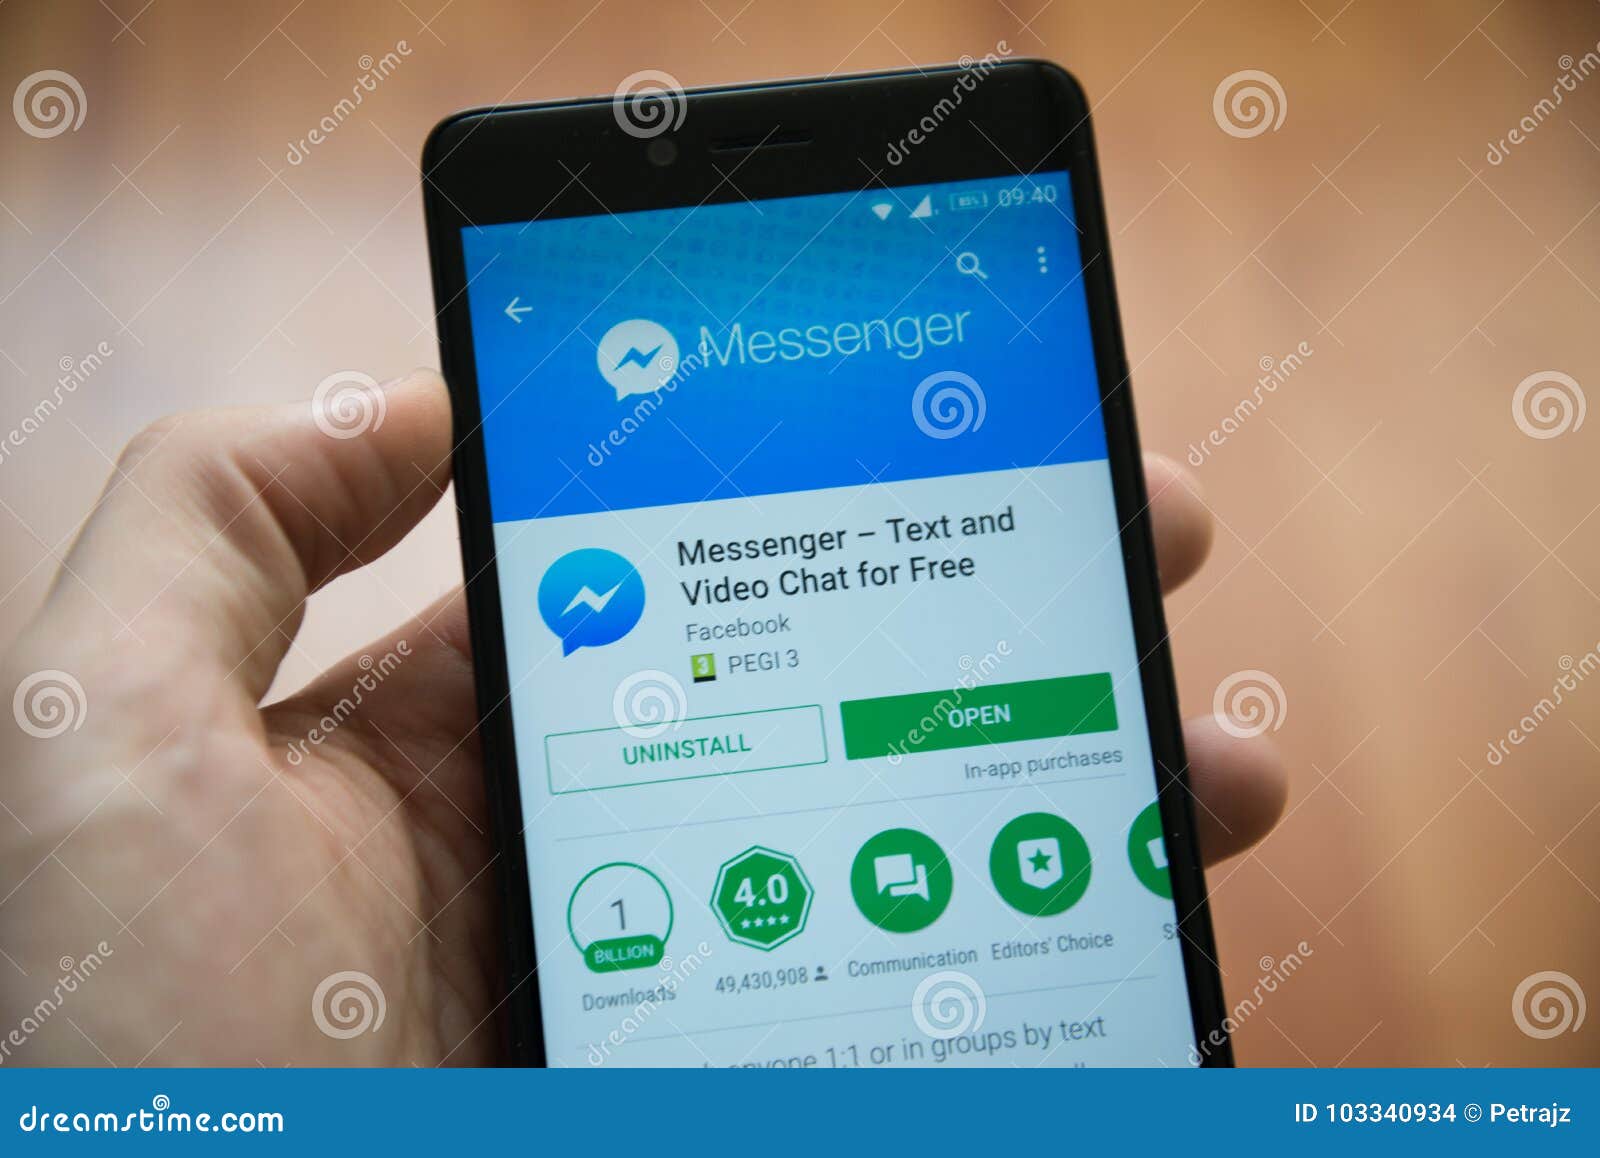 Messenger on google play store faa far aim pdf download